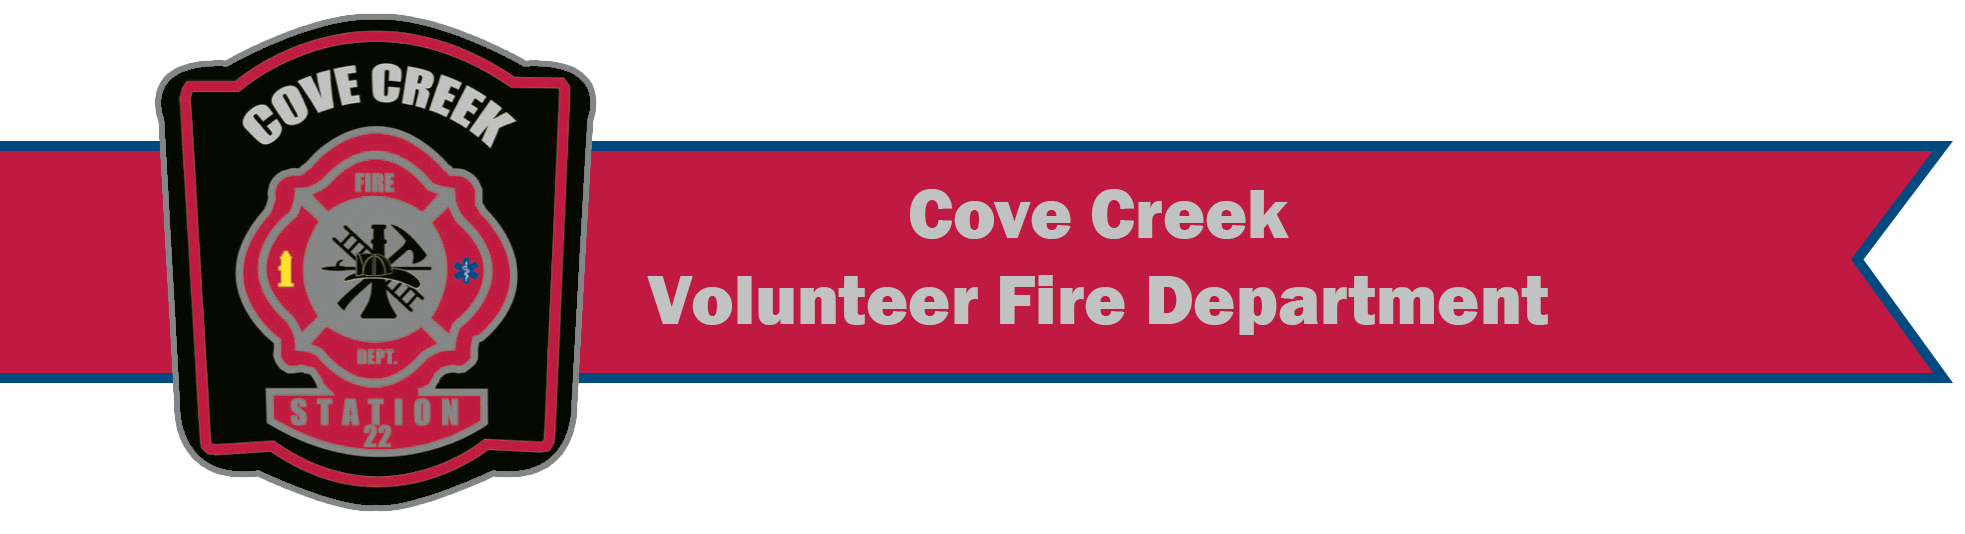 Cove Creek Fire